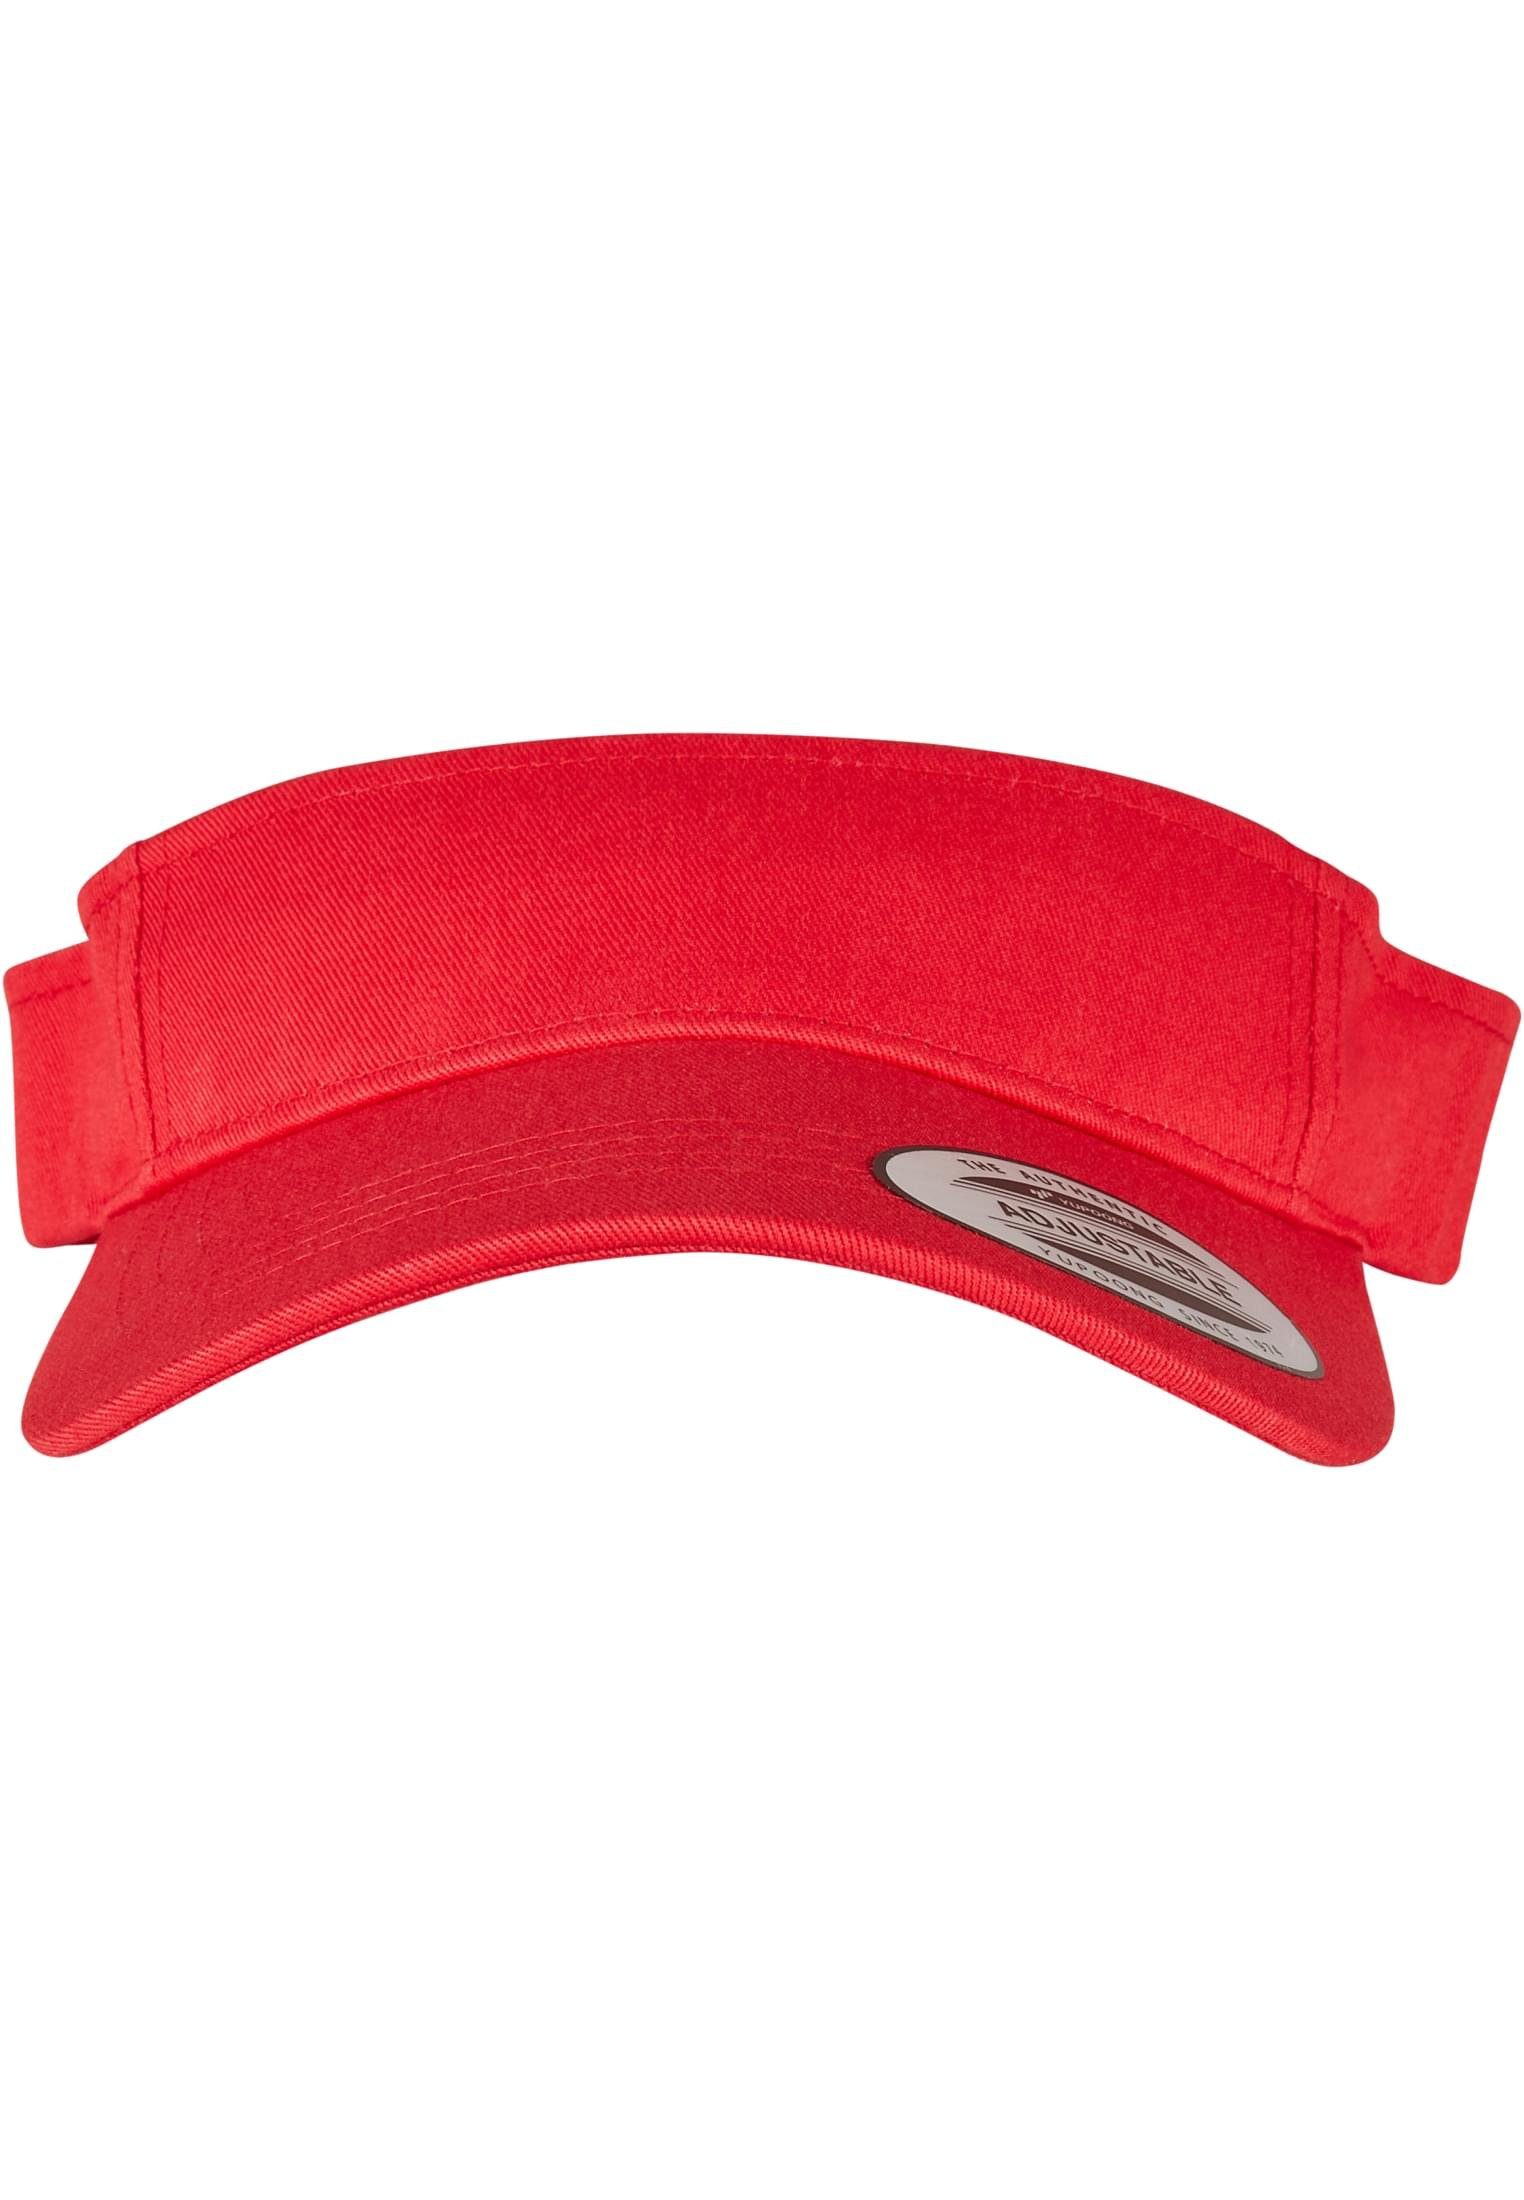 [Sonderverkaufsartikel] Flexfit Flex Cap Accessoires Curved Visor Cap red